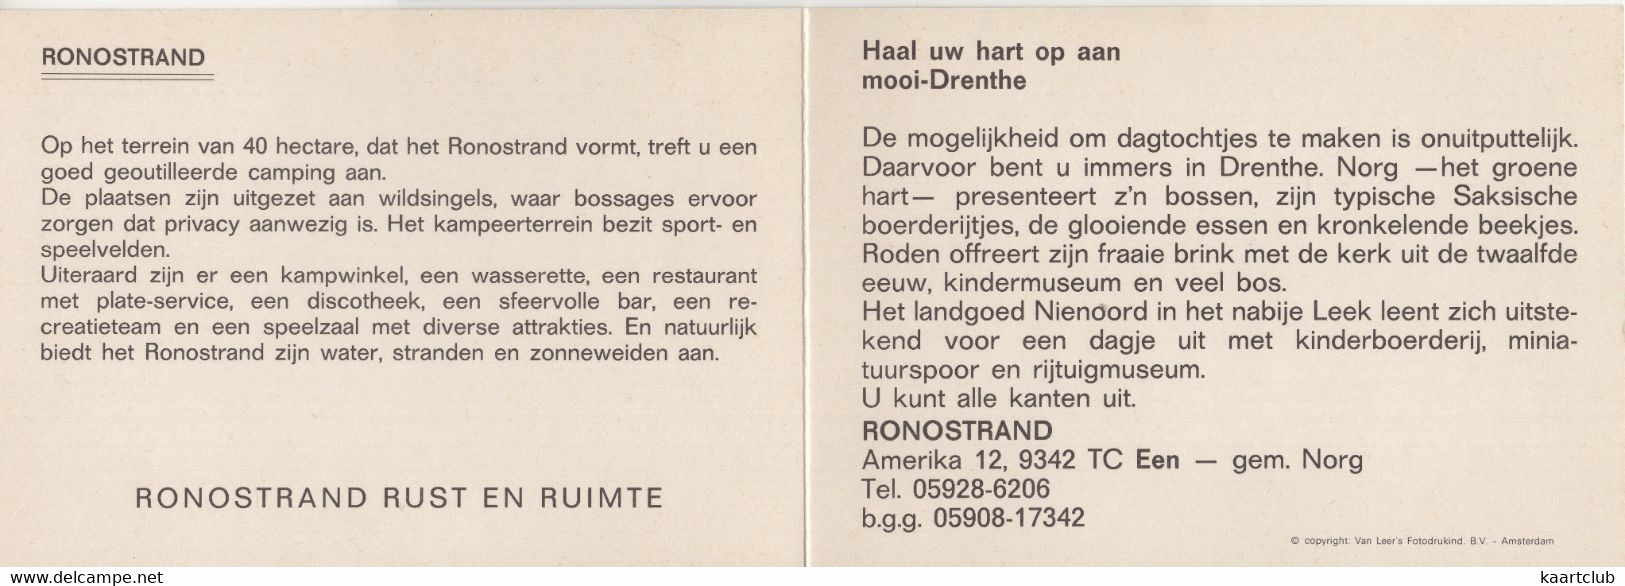 Roden - Norg: 'Ronostrand', CAMPING - Amerika 12, Een - (Drenthe, Nederland/Holland) - Norg